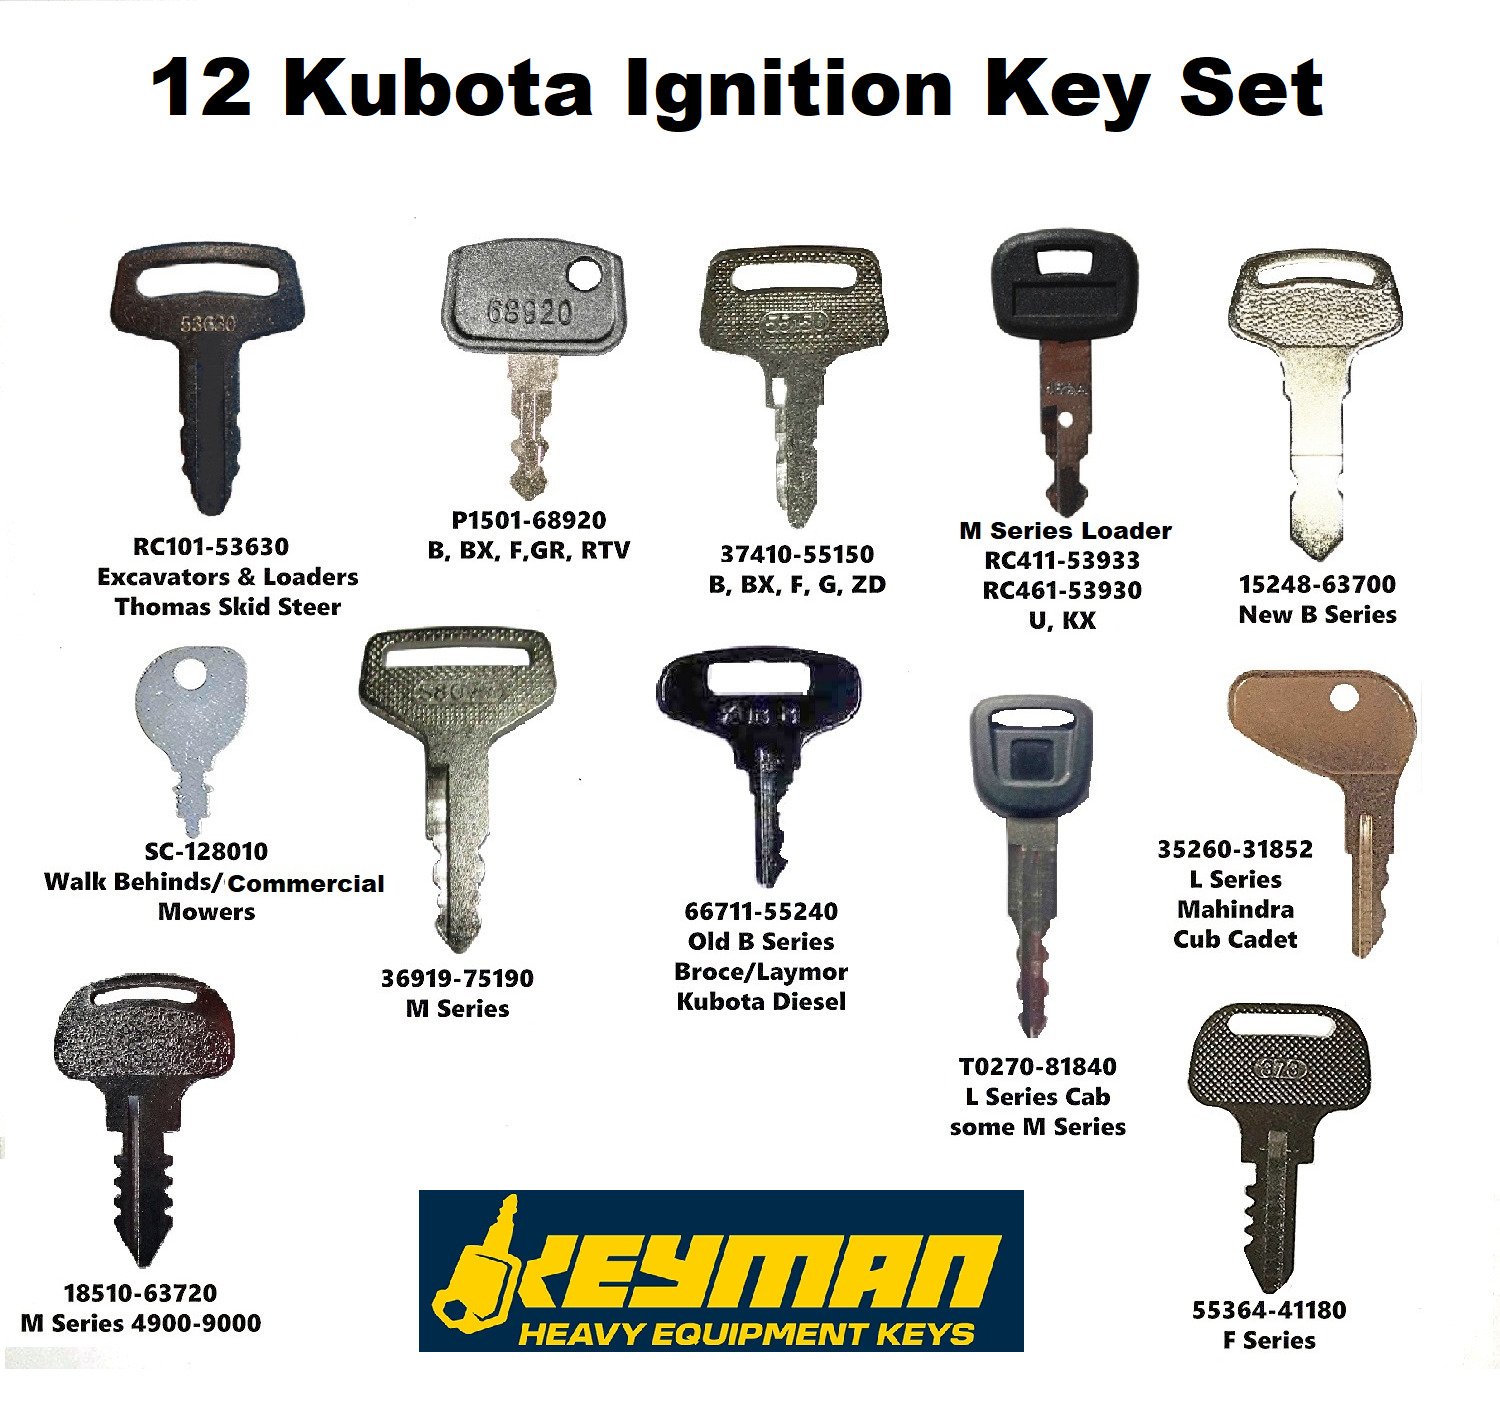 12 Kubota Tractor & Equipment Ignition Key Set fits most Kubota Tractor Models